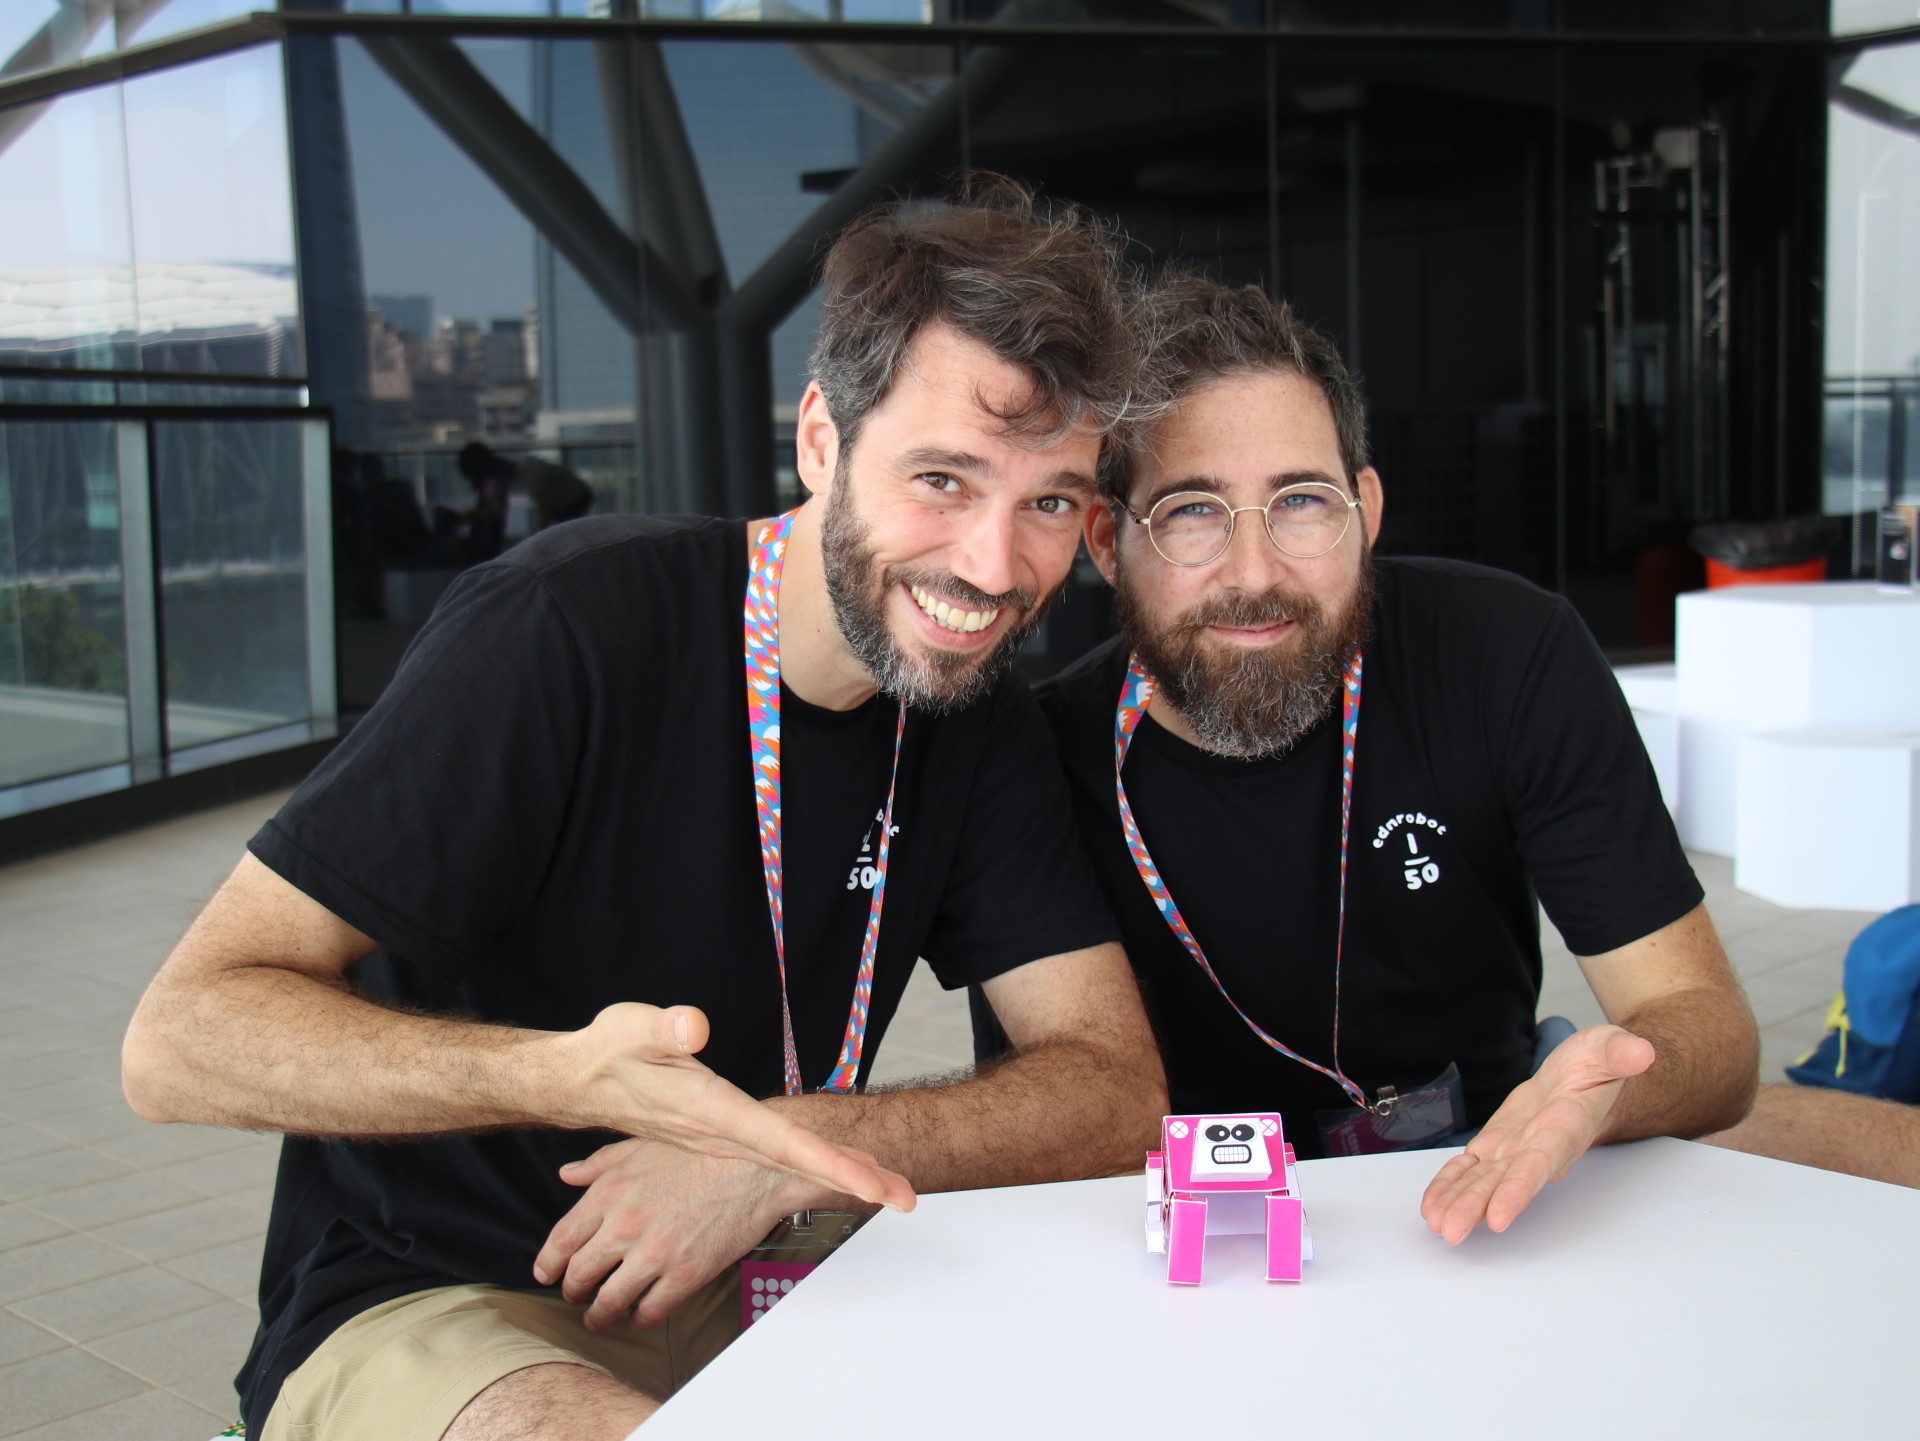 Thibault Joyeuxc 和 Julien Kadouri兩位導演每一回帶作品出國巡演時，都會隨身攜帶心愛的「家人」－純手工紙製的「小機器人」（Ed n’Robot）到各地拍照錄影。-圖片